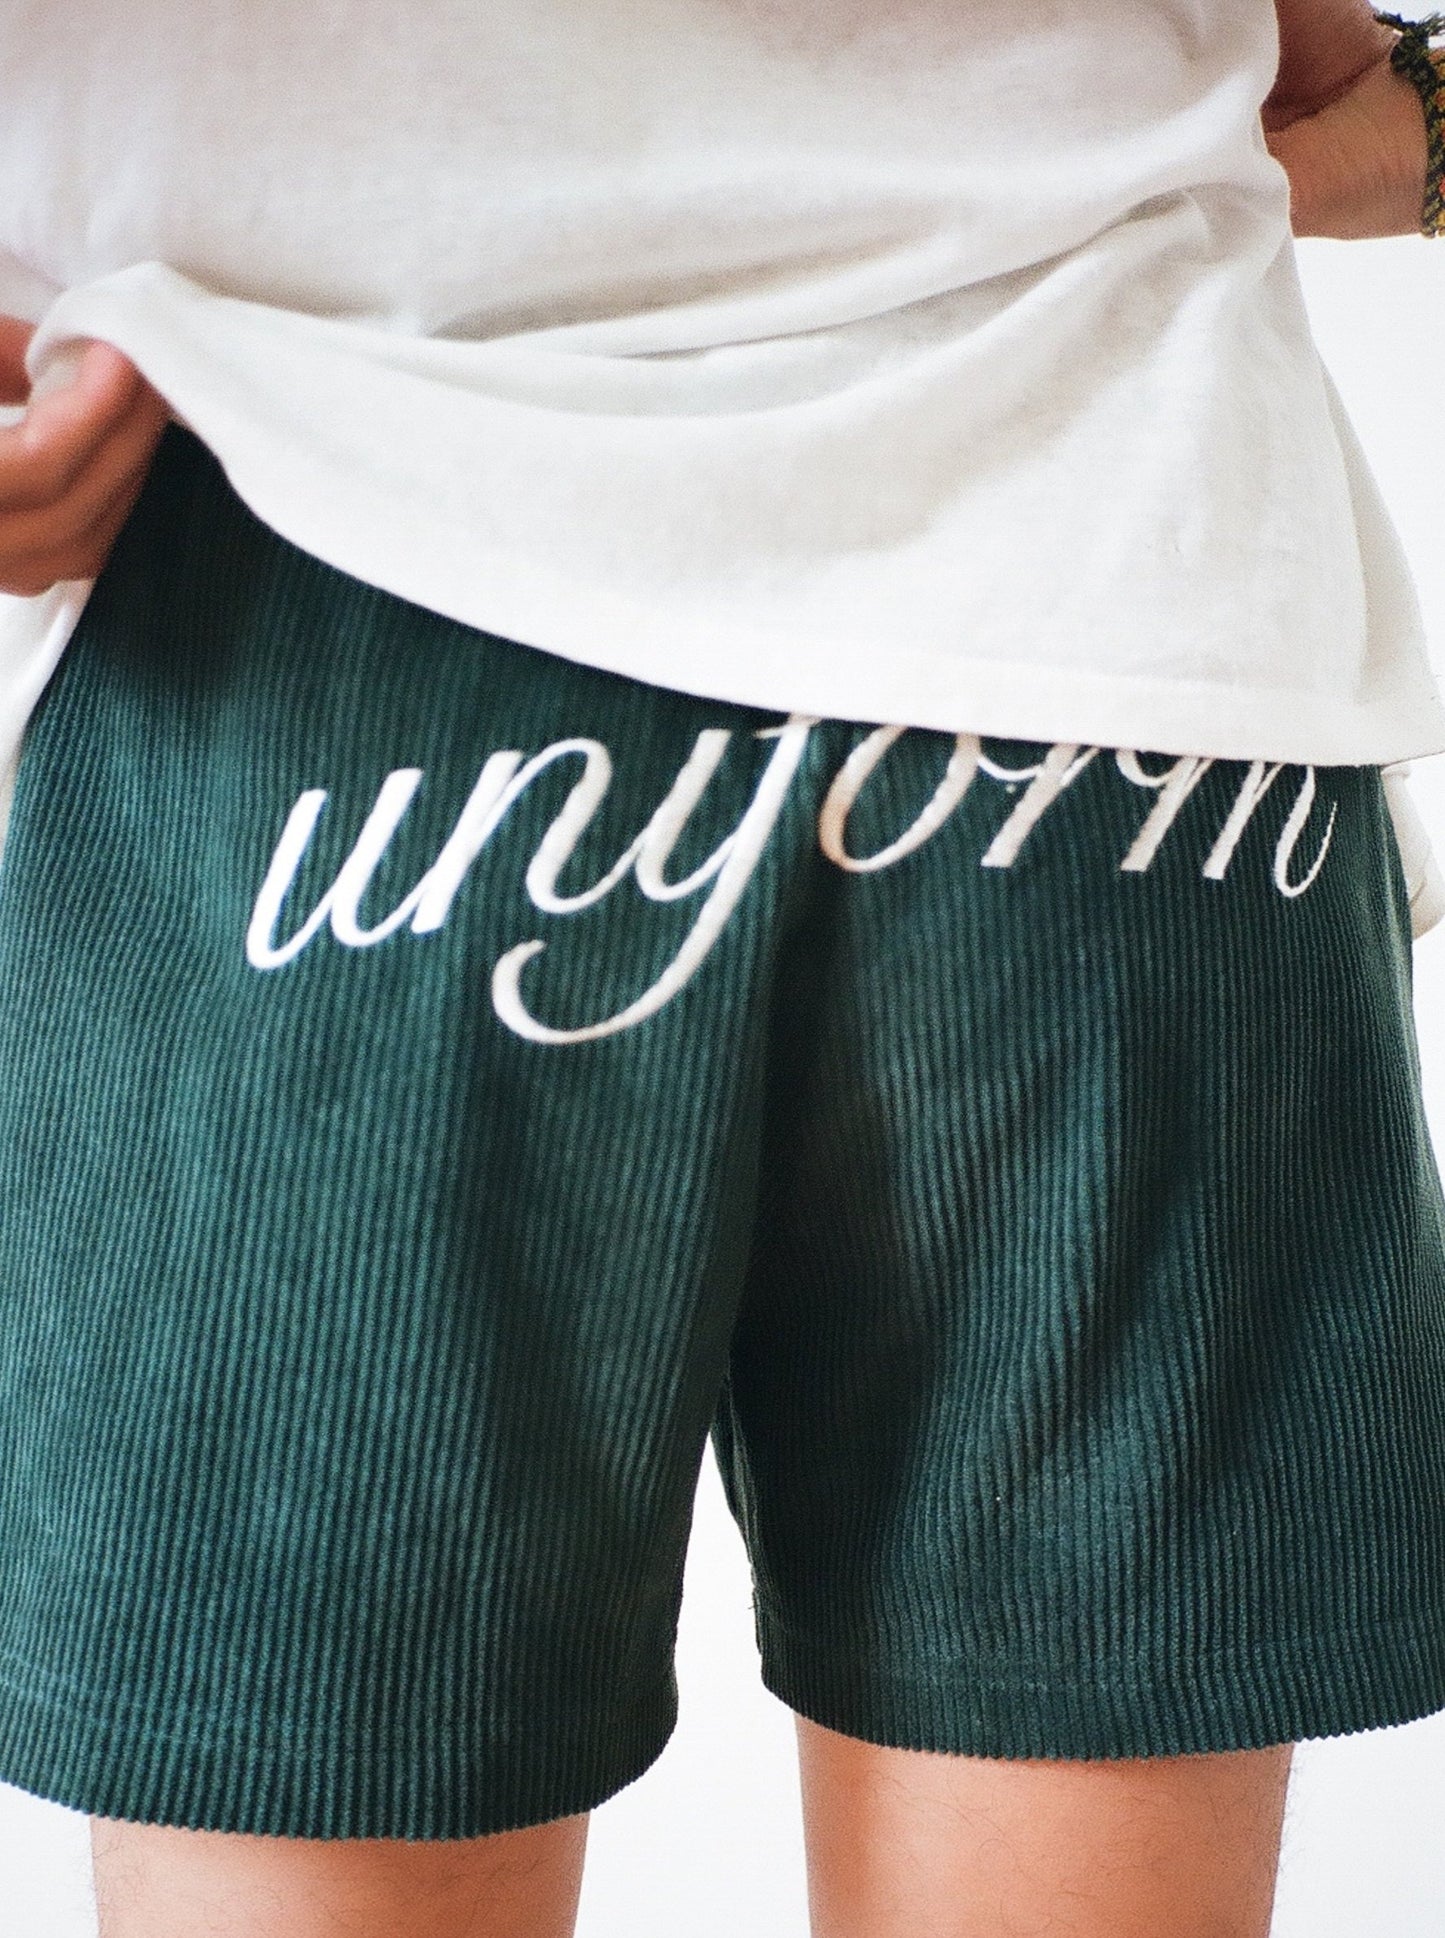 UNIFORM corduroy shorts - hunter green